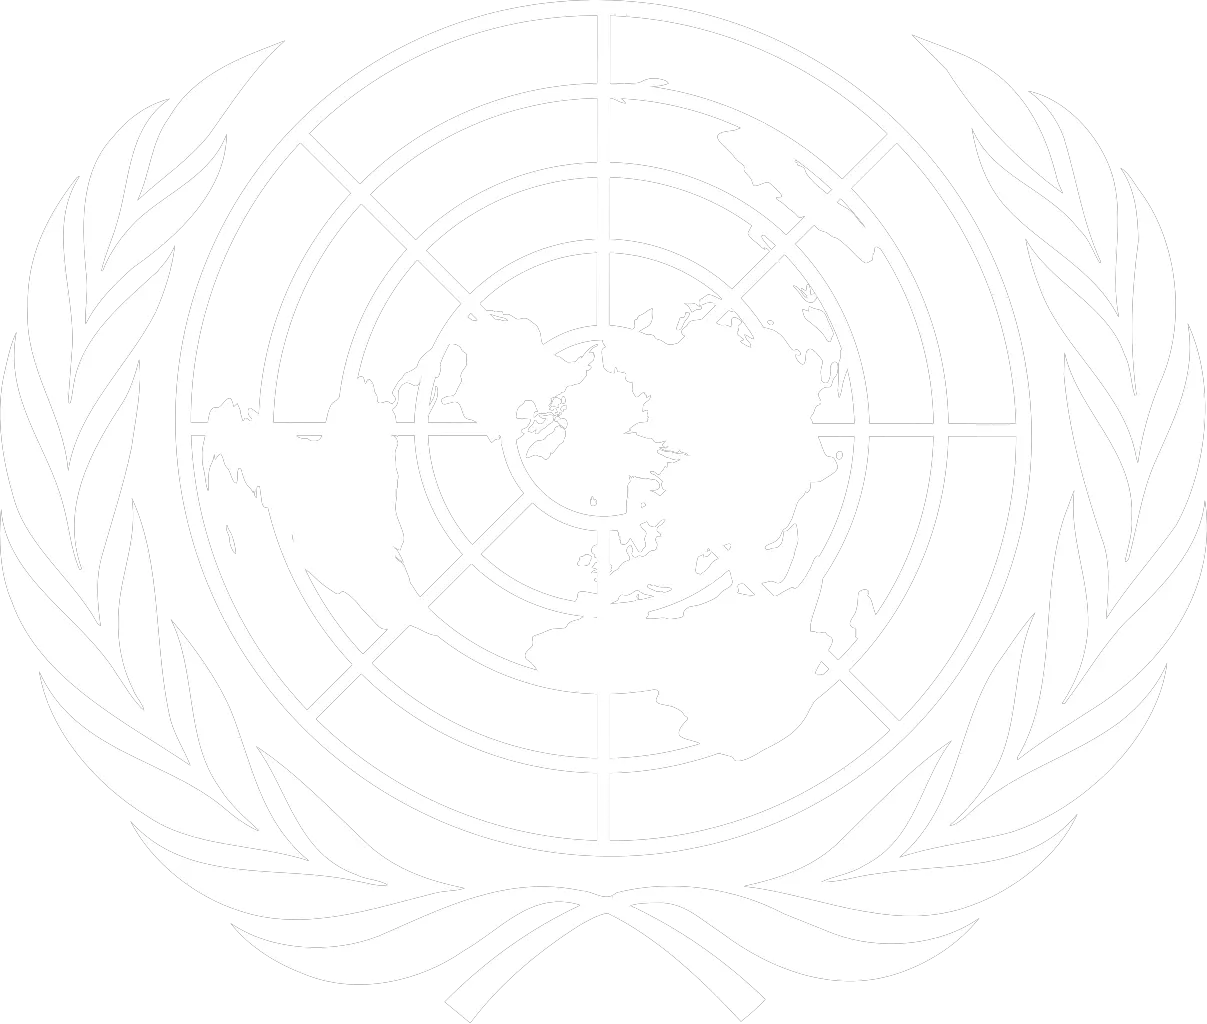 White Un Logo Vectorised Png Clip Arts For Web Clip Arts White United Nations Logo Vectorise Png